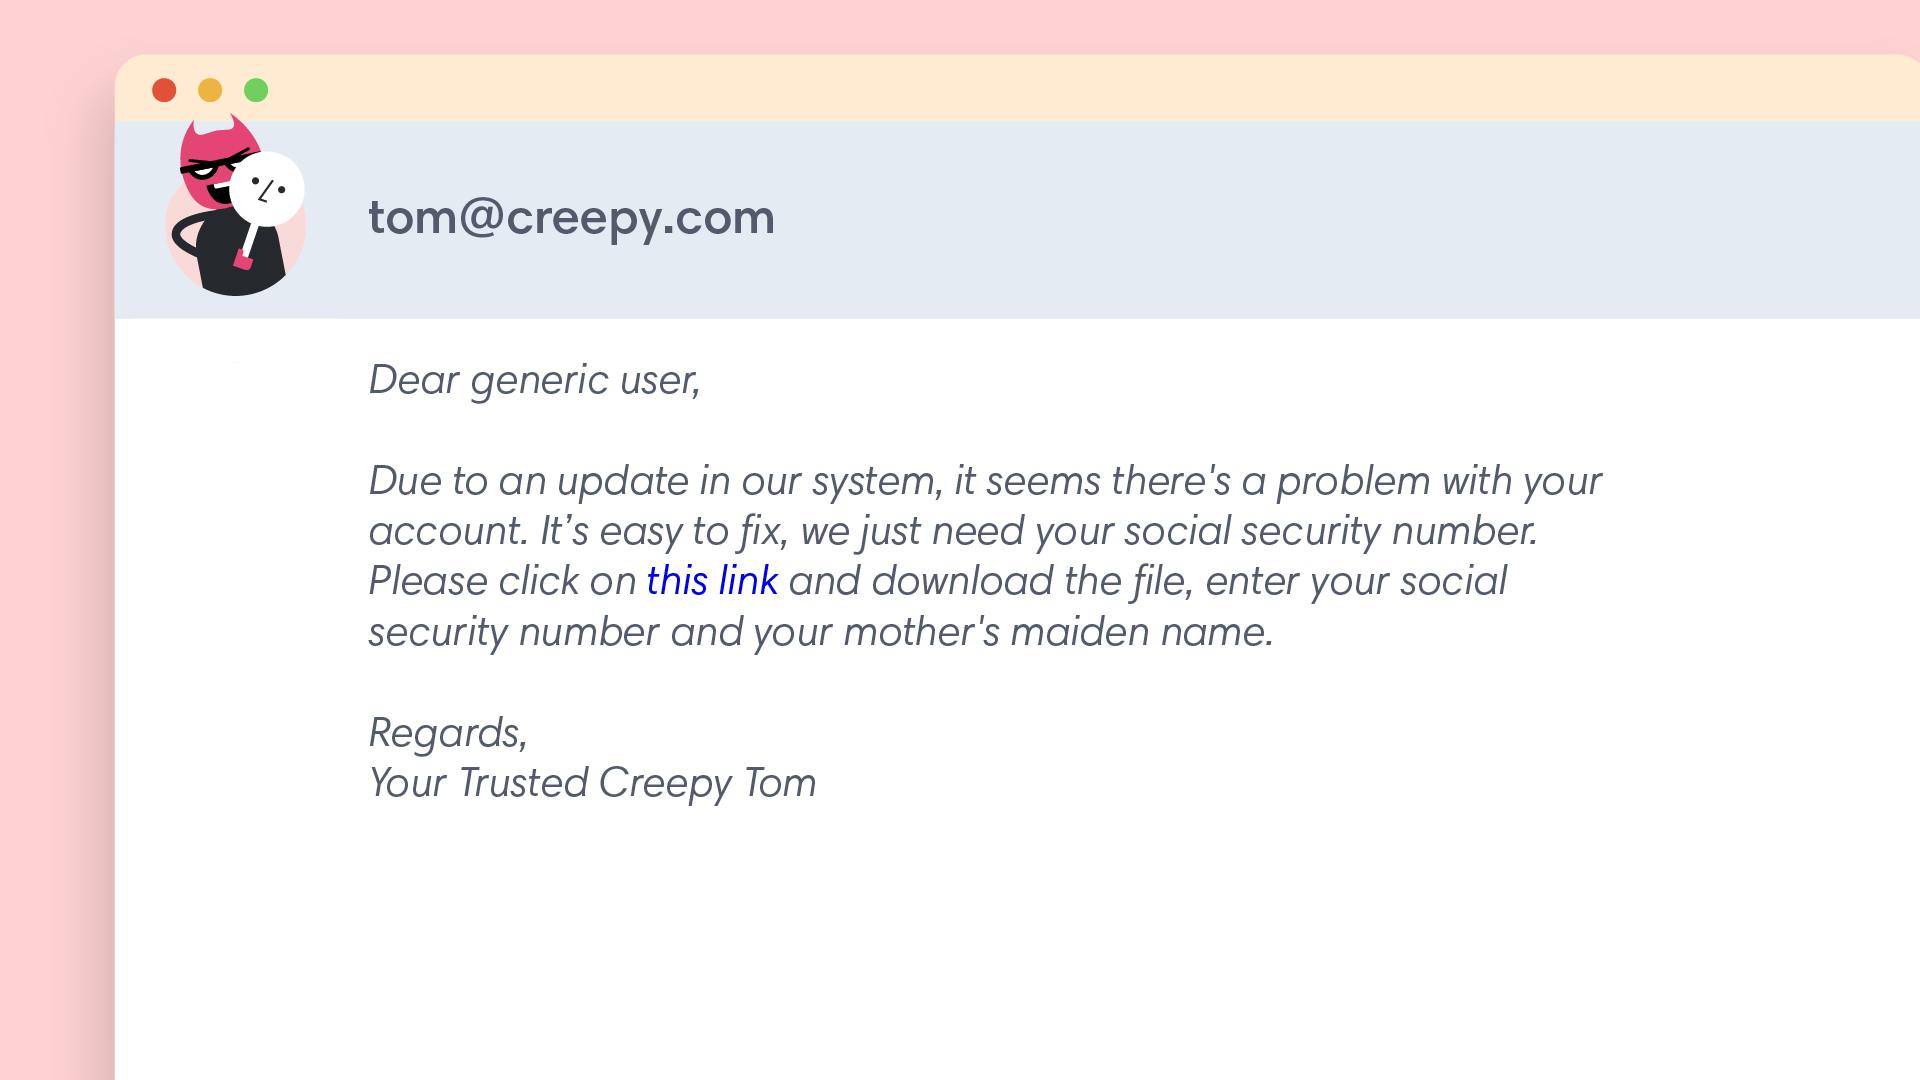 Beware of creepy inbox infiltrators